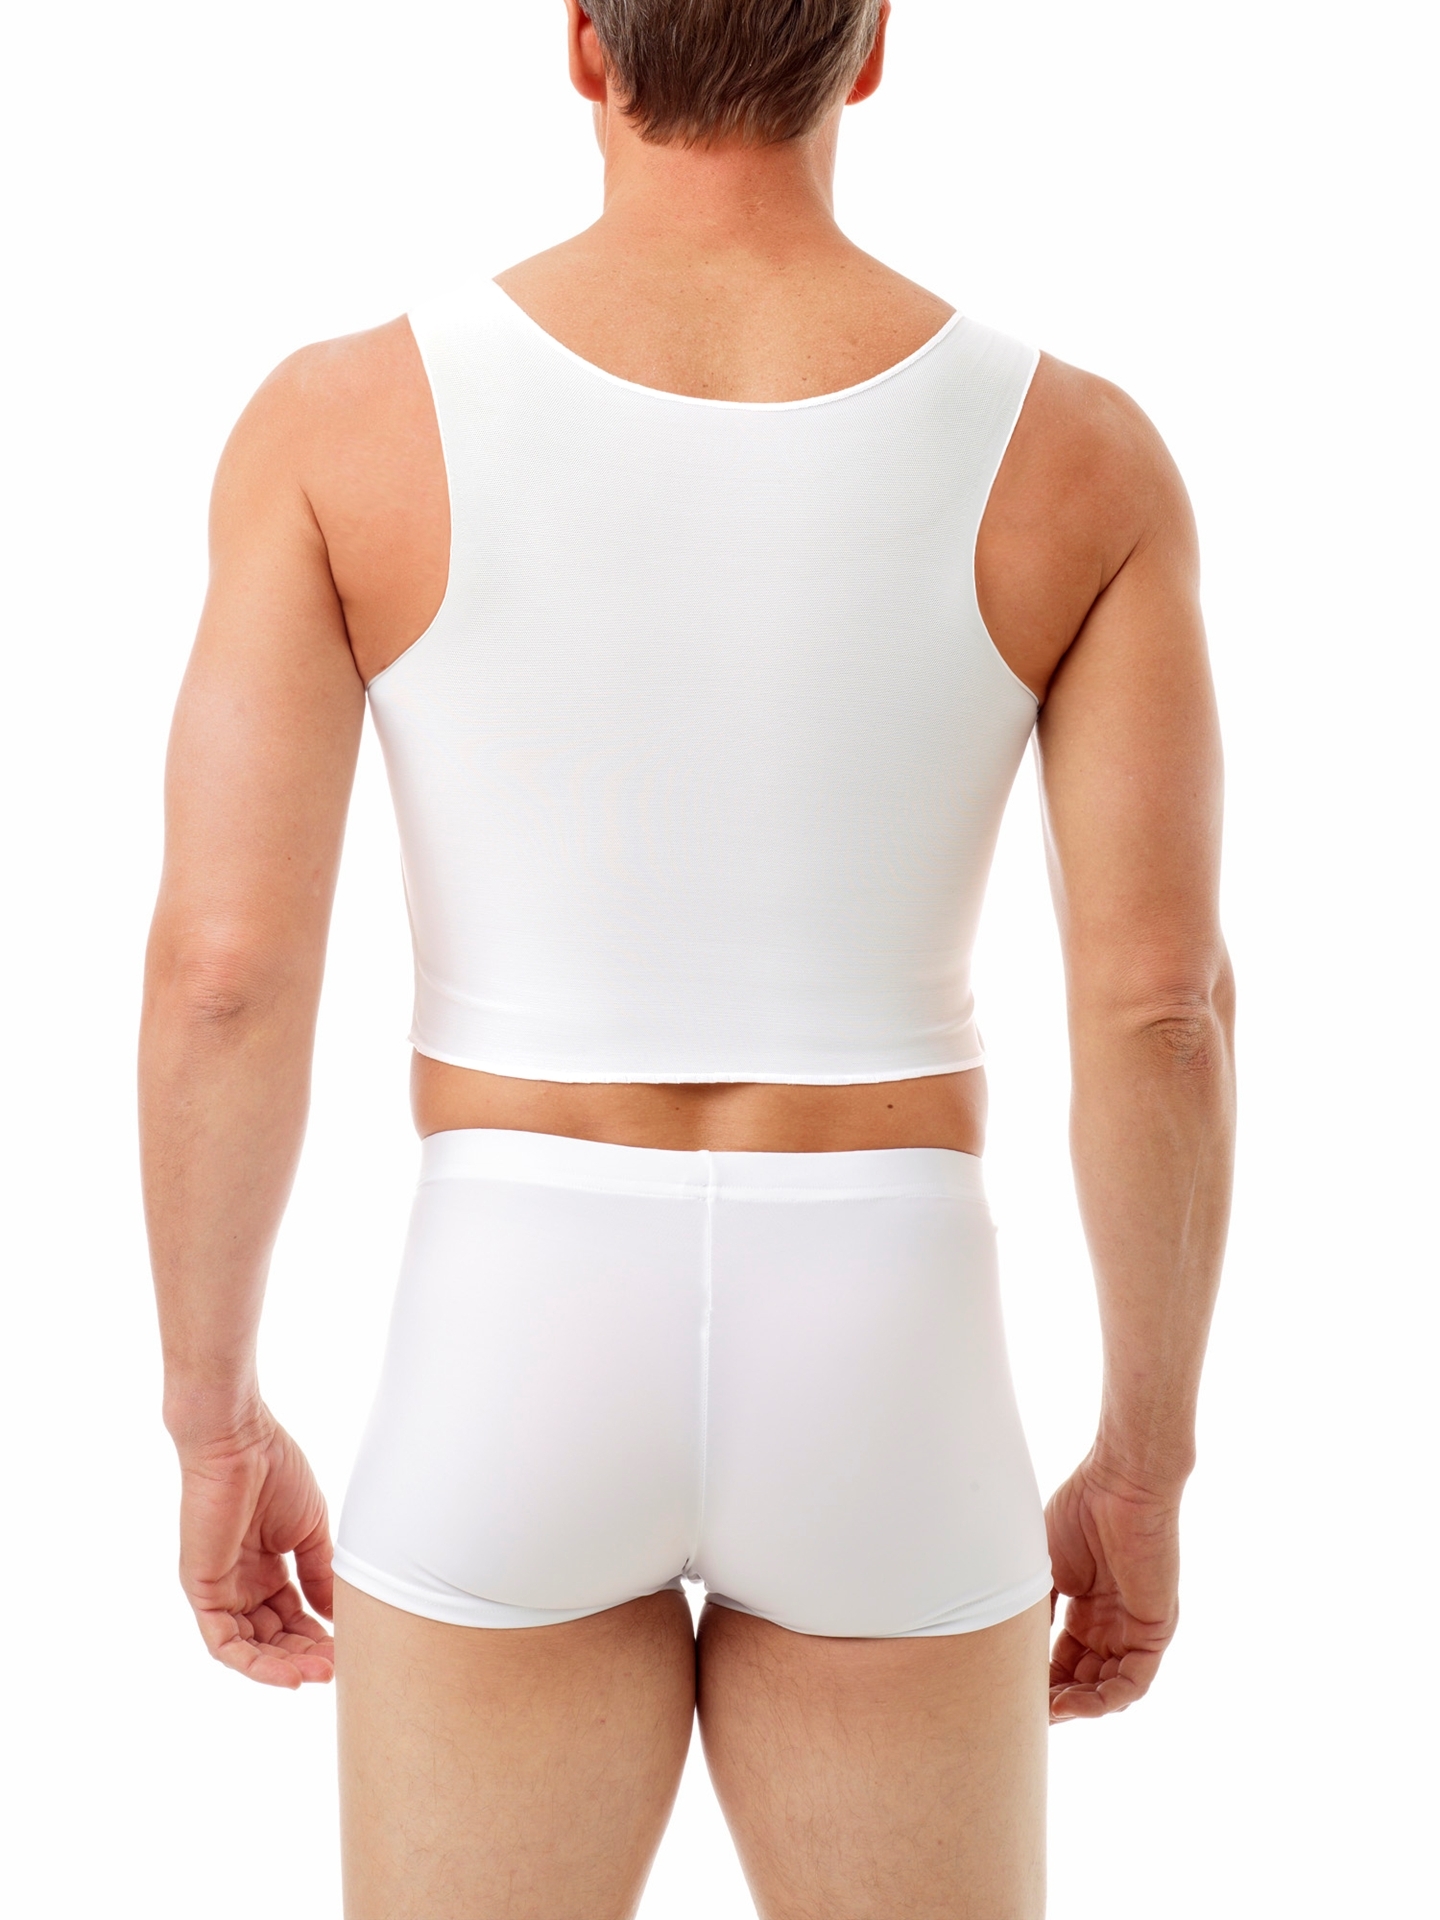 Cotton Concealer Chest Binder, Men Compression Garments